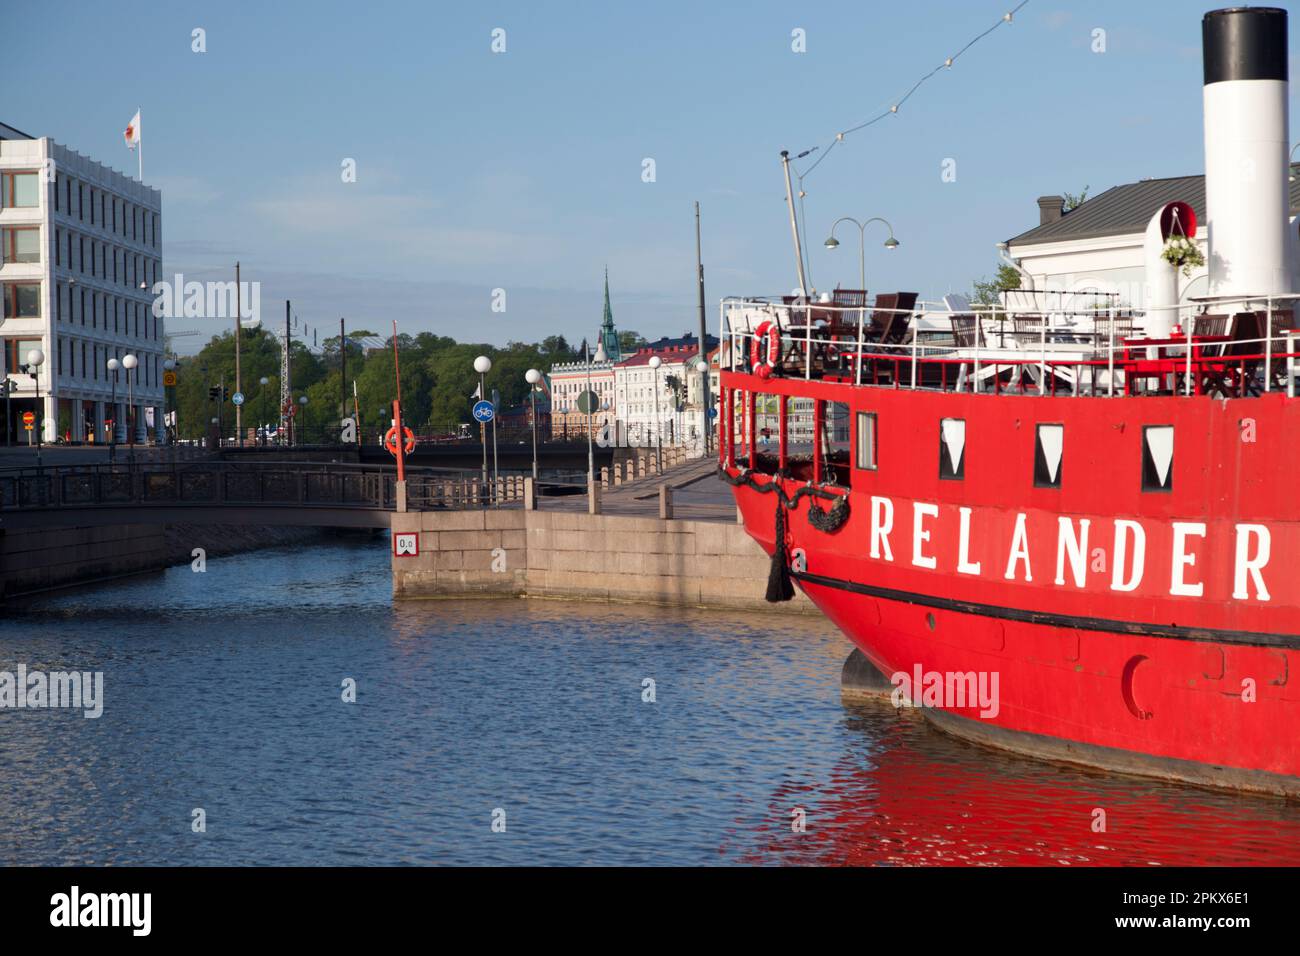 Finland, Helsinki,  Relandersgrund boat used as a floating restaurant. Stock Photo